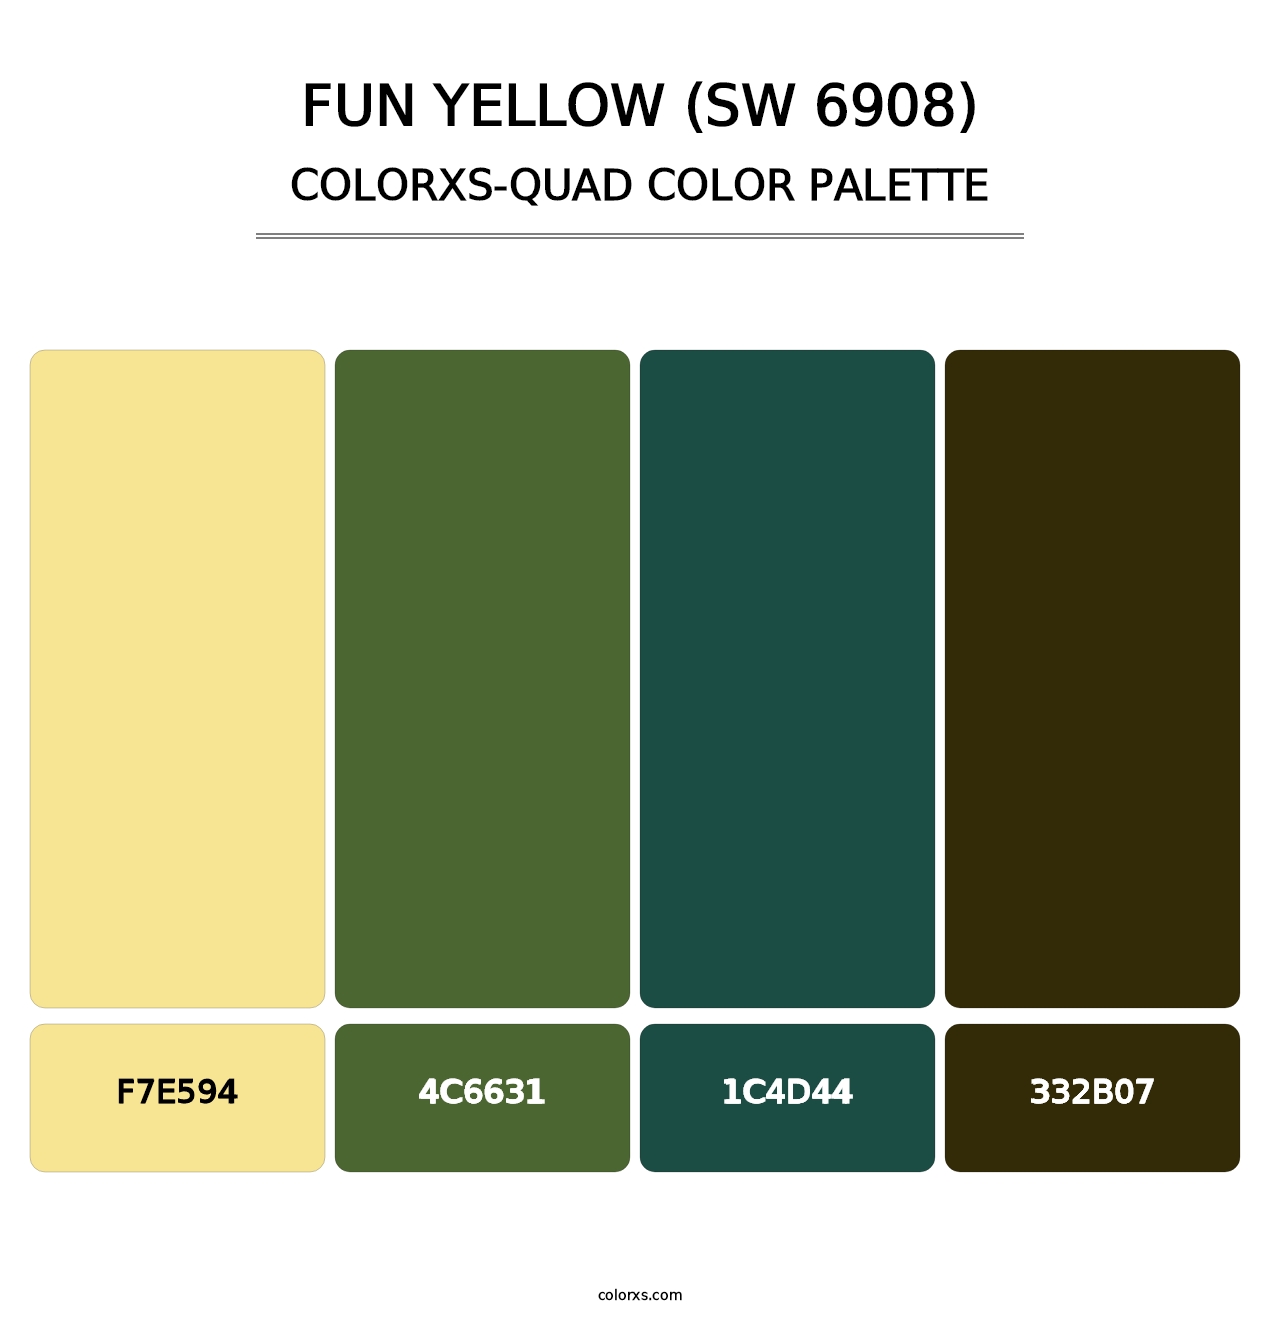 Fun Yellow (SW 6908) - Colorxs Quad Palette